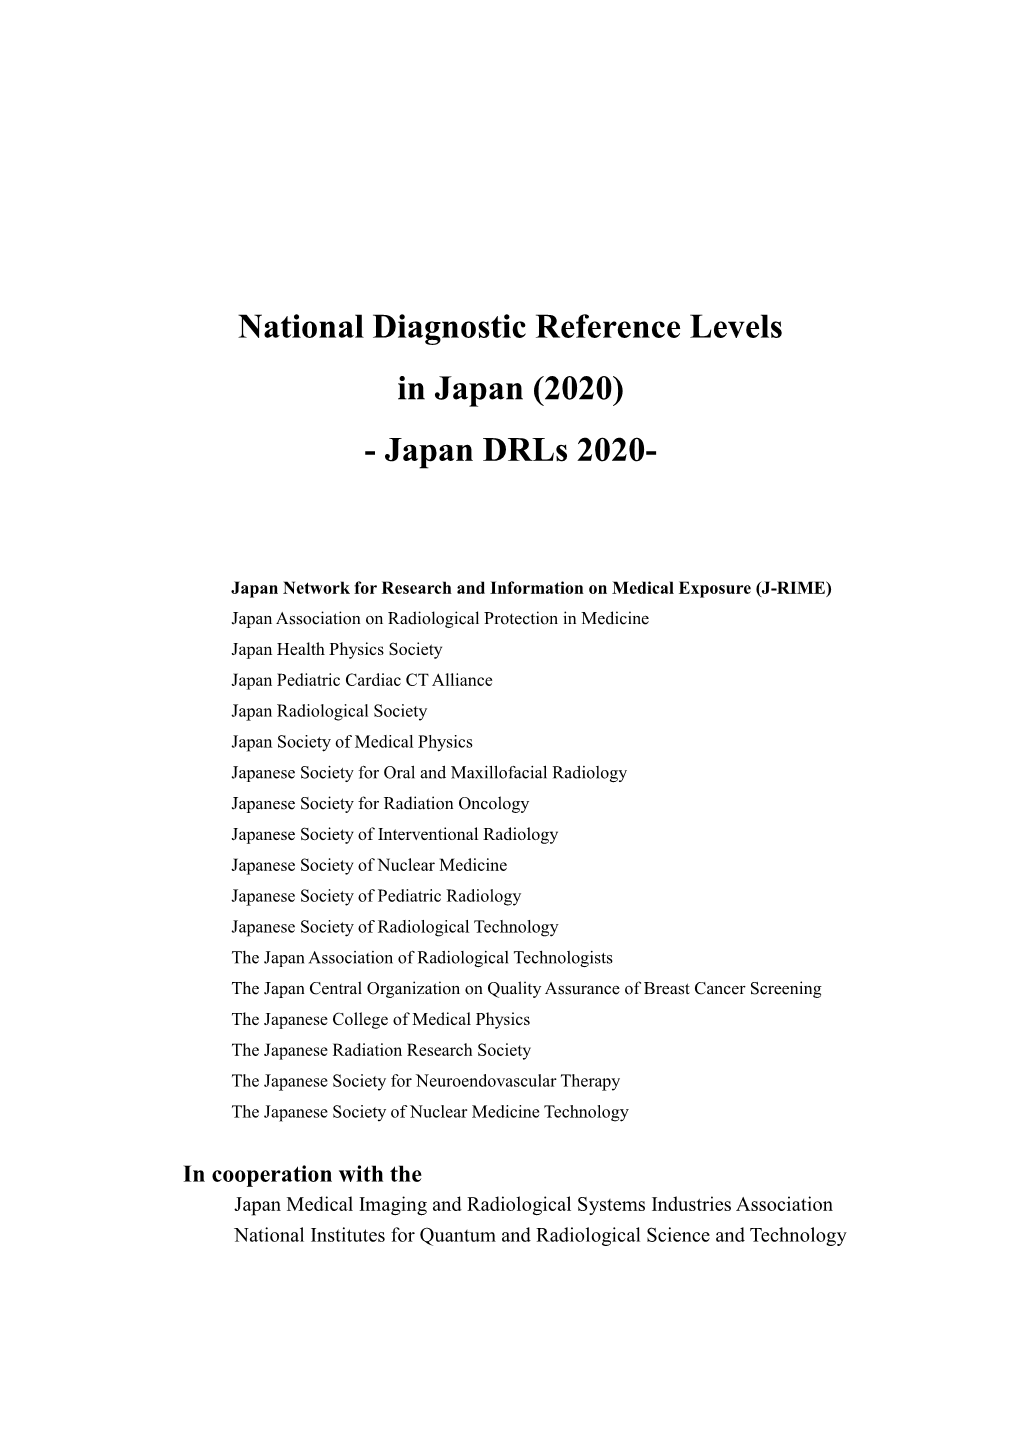 National Diagnostic Reference Levels in Japan (2020) - Japan Drls 2020